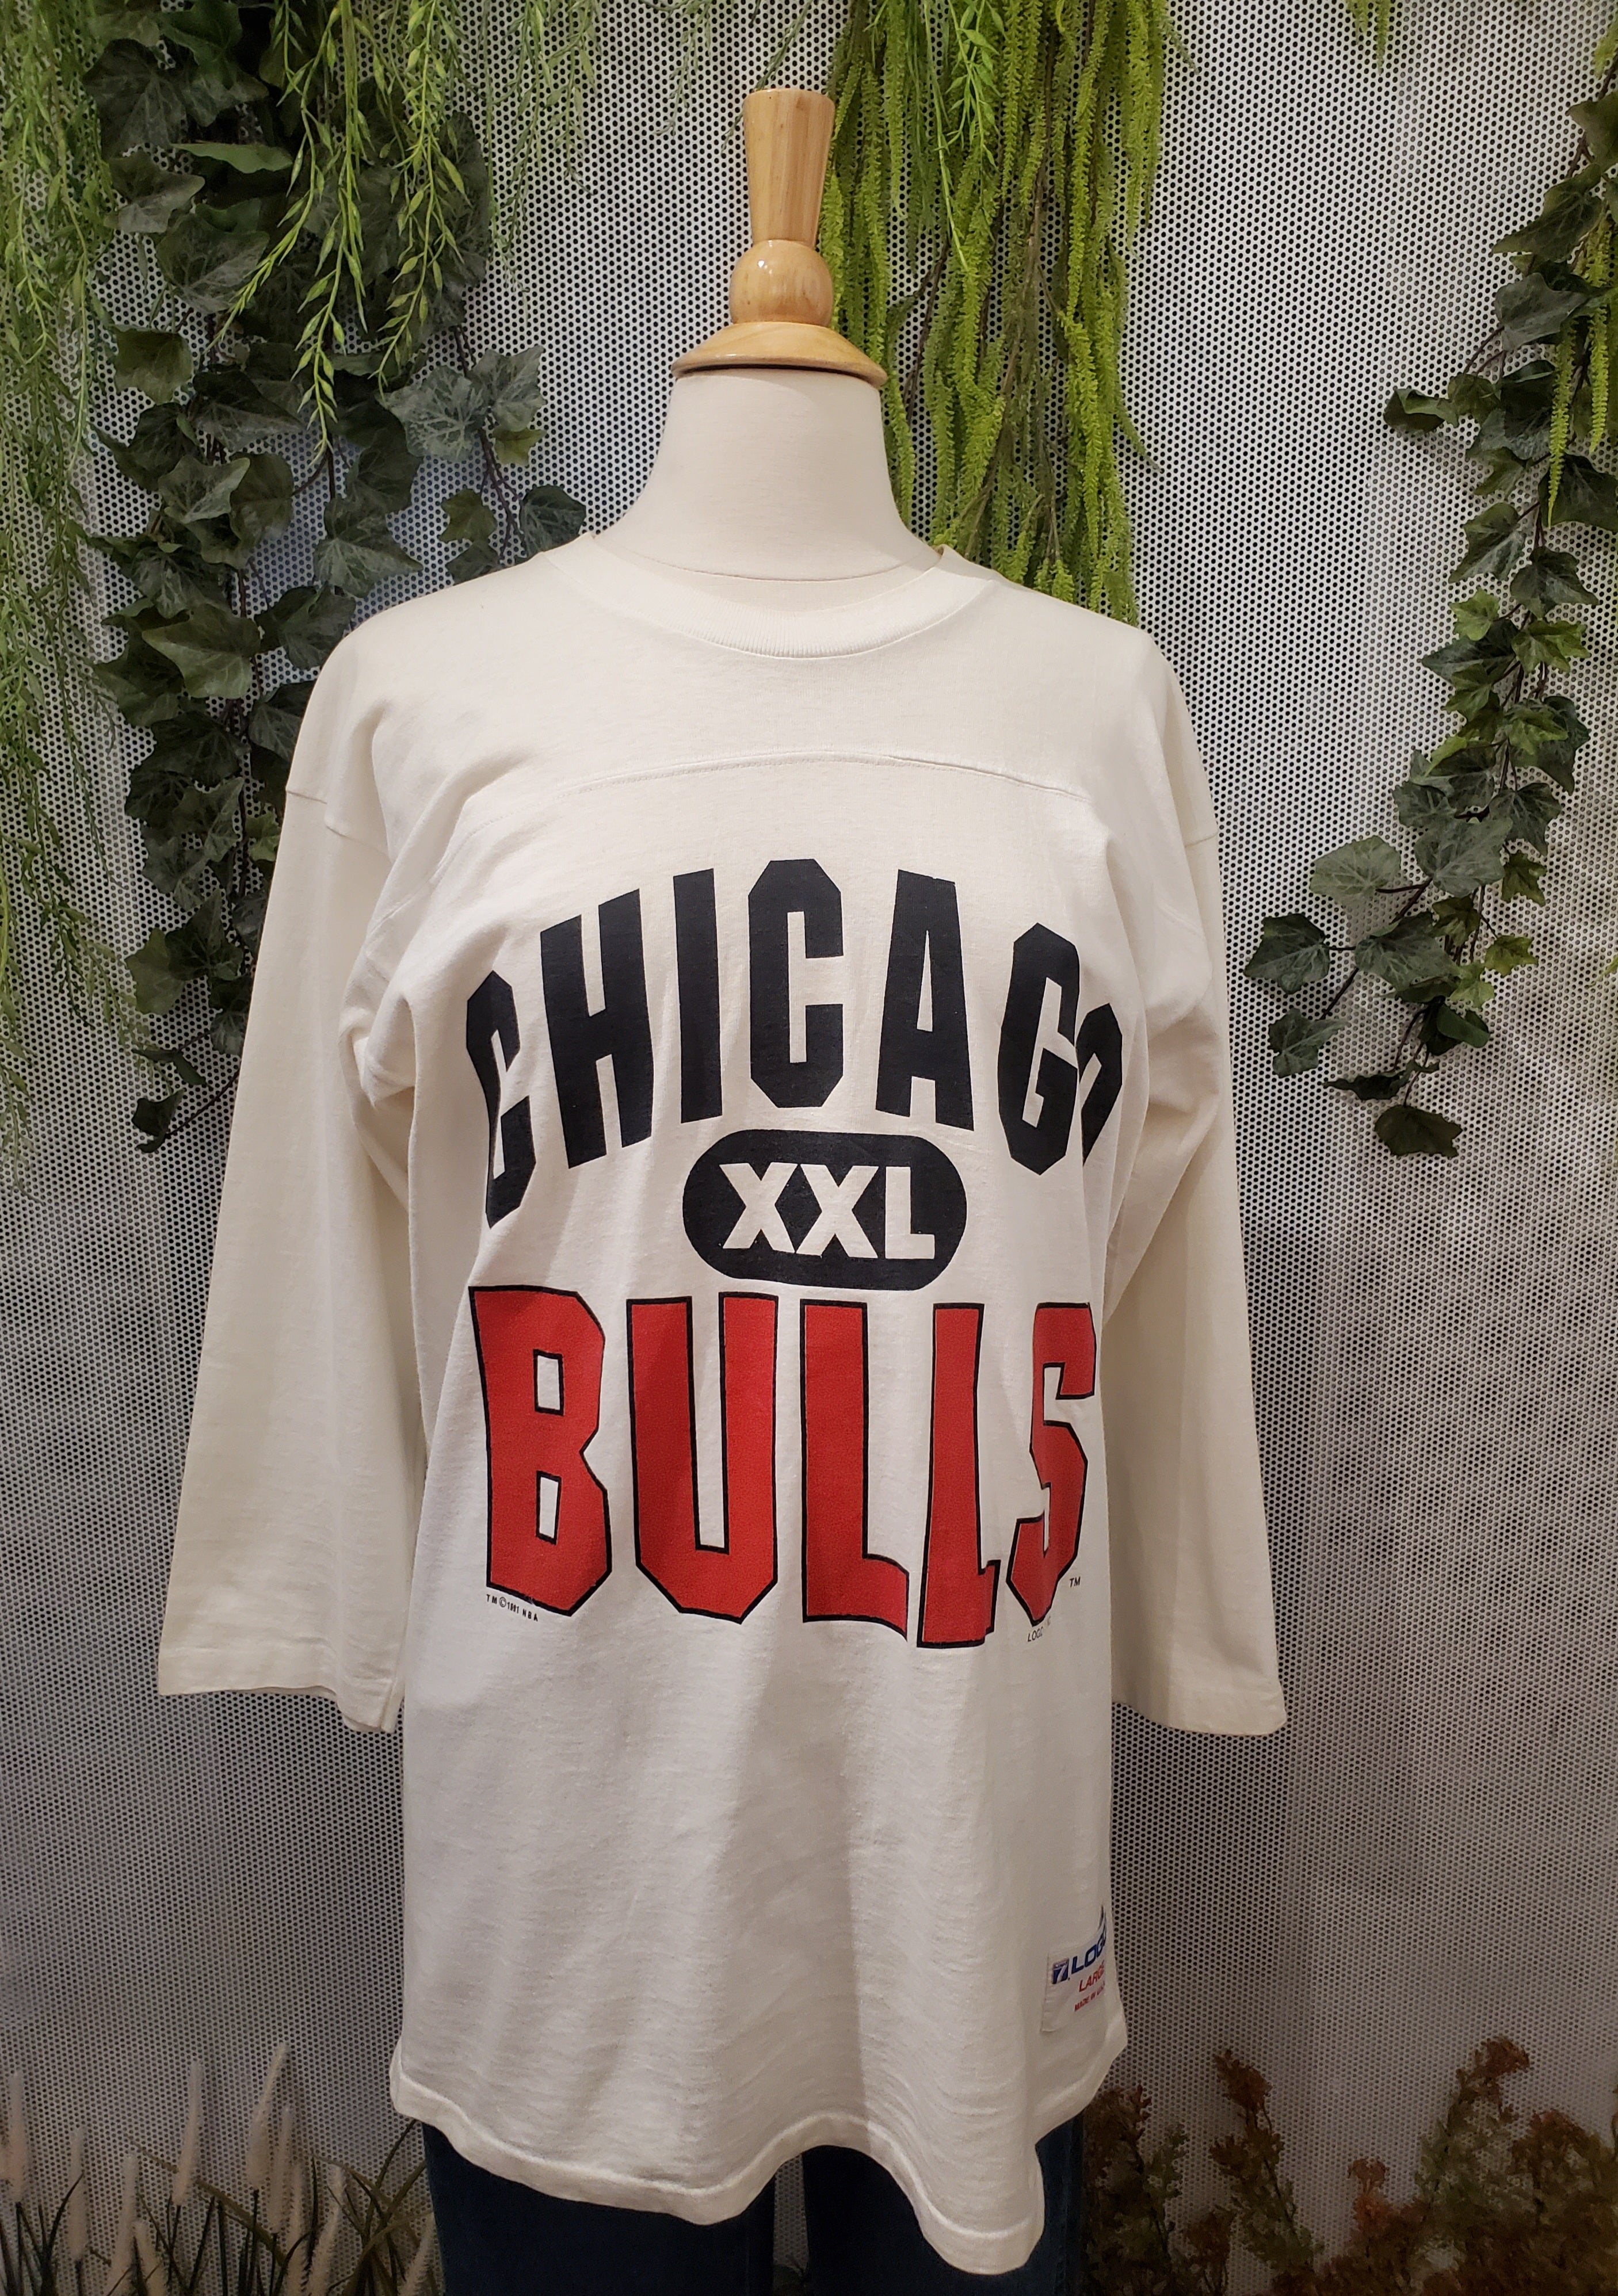 1991 Chicago Bulls T Shirt